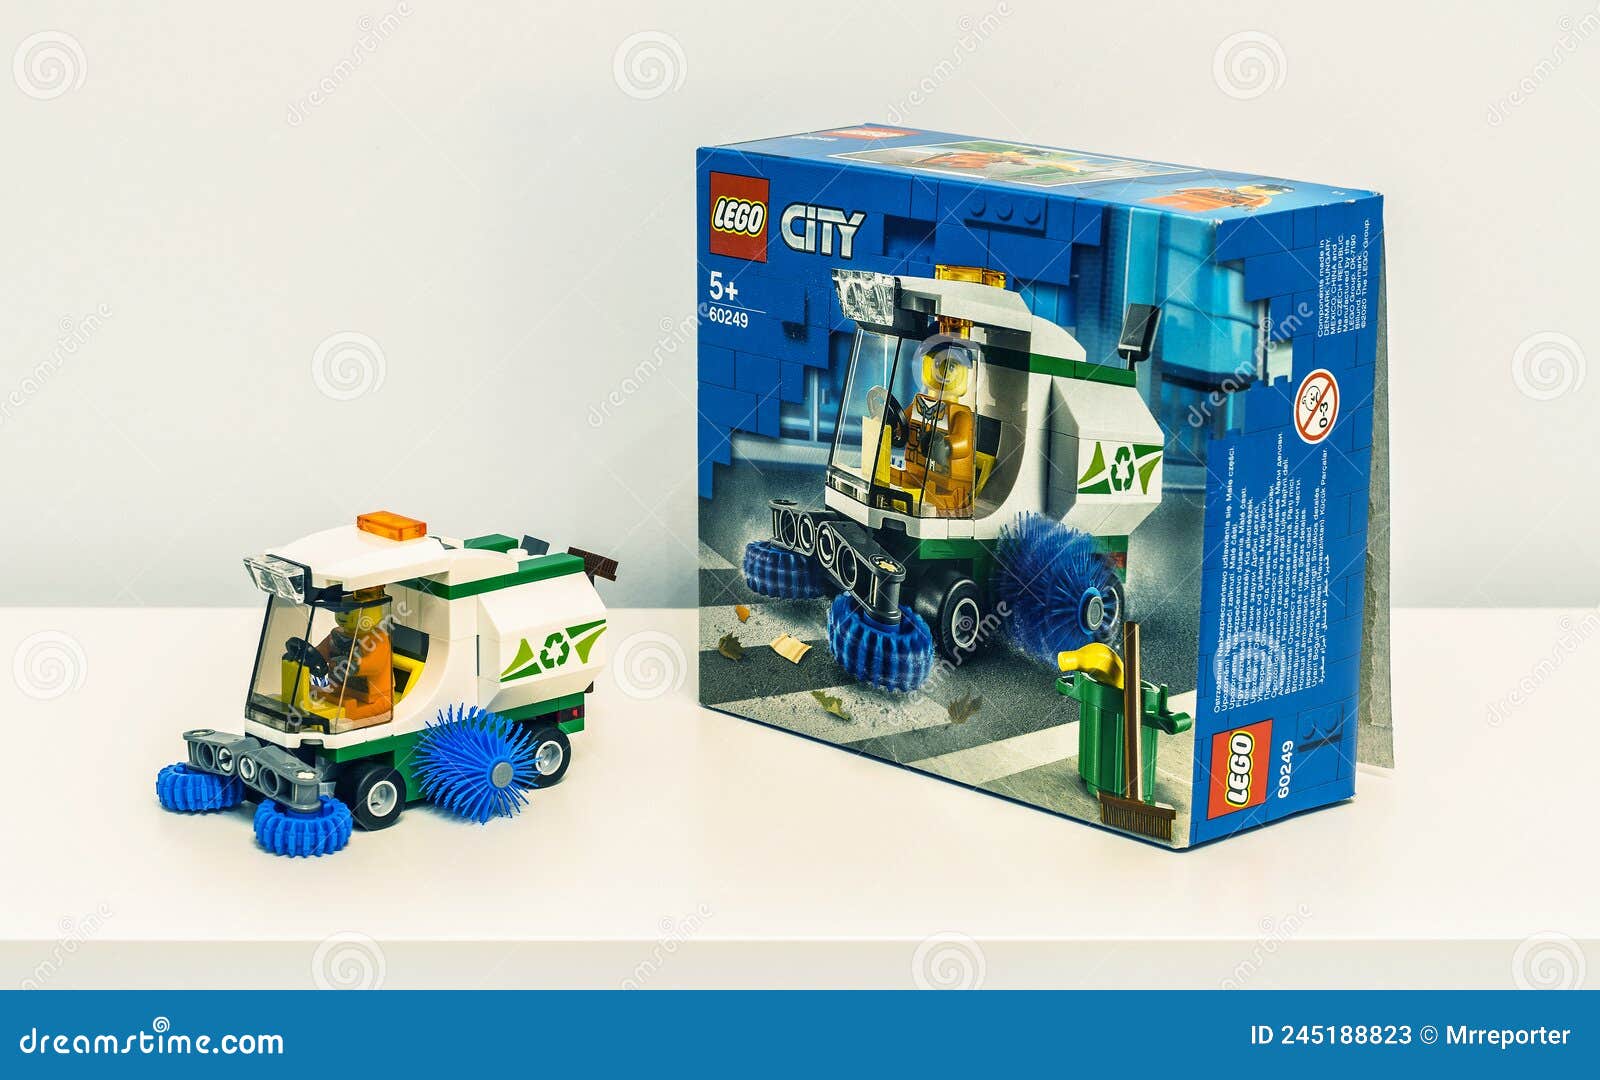 Lego City 60249 Street Sweeper Multicolor